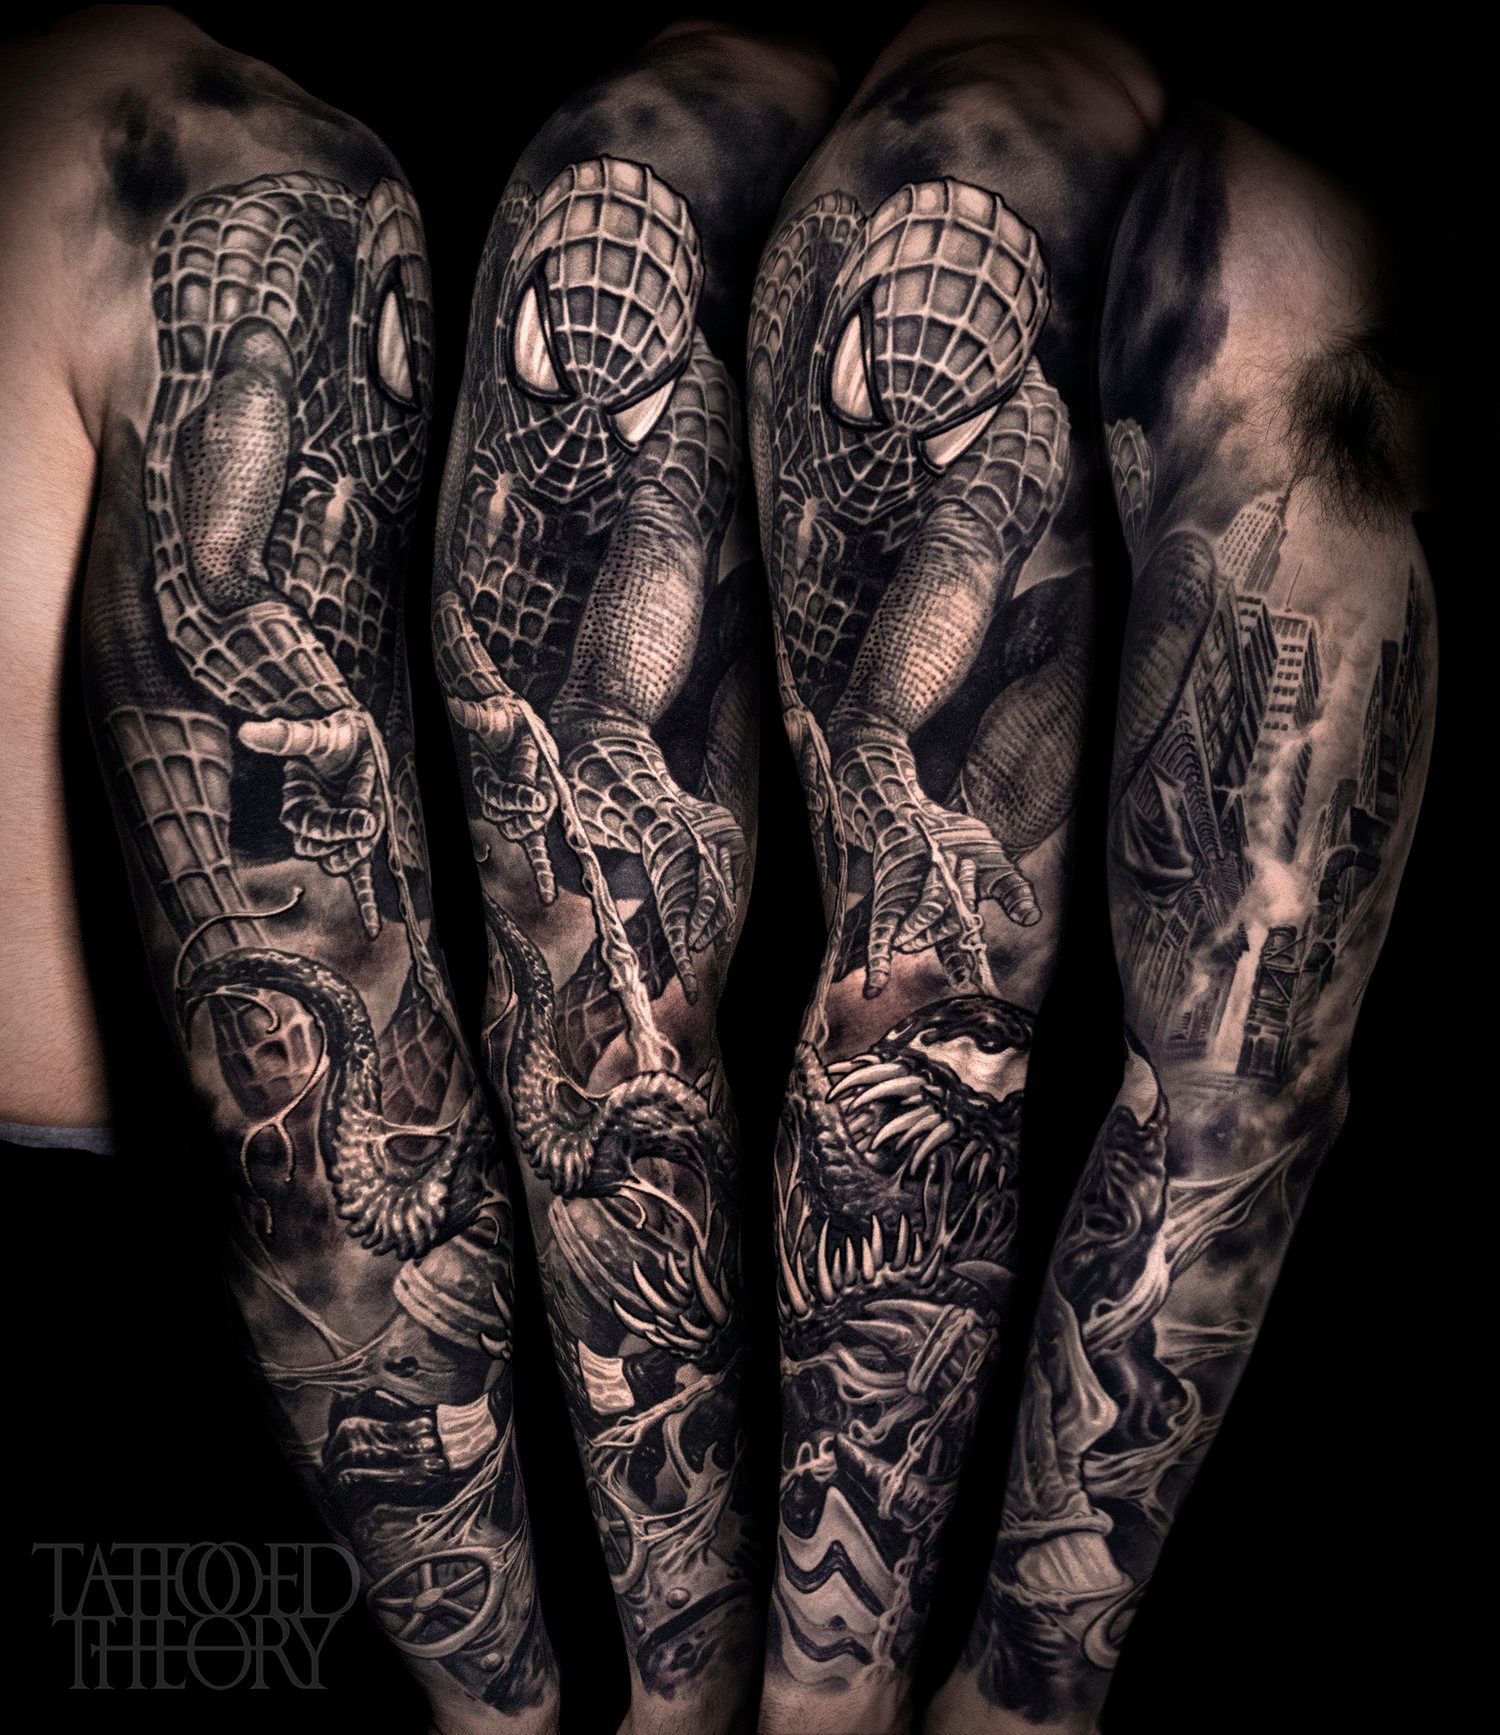  In progress jungle leg sleeve  Shade of Blue  Tattoo  Facebook